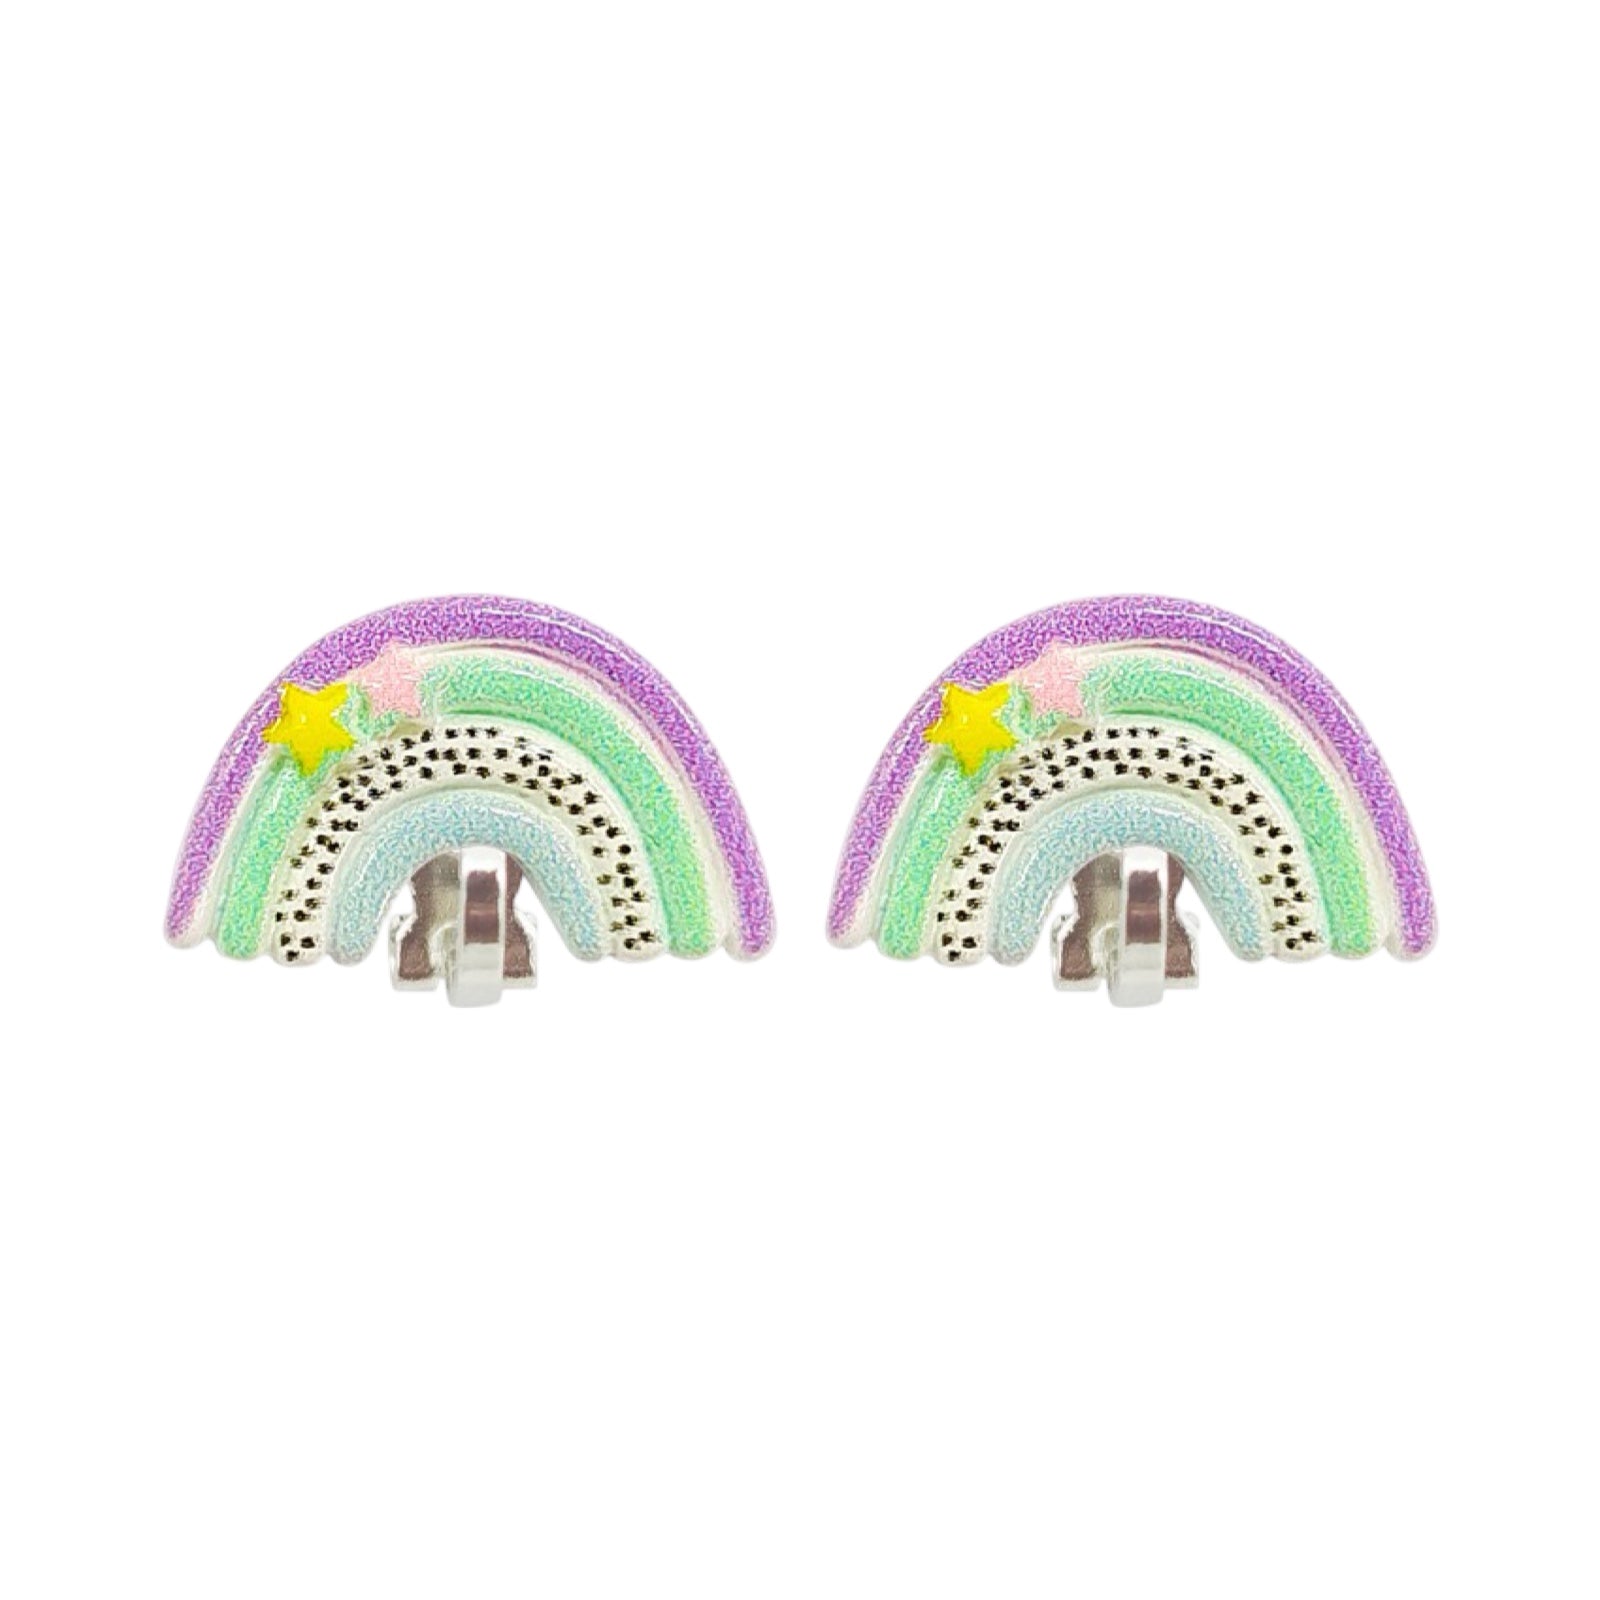 Clip earrings: Rainbow pastel